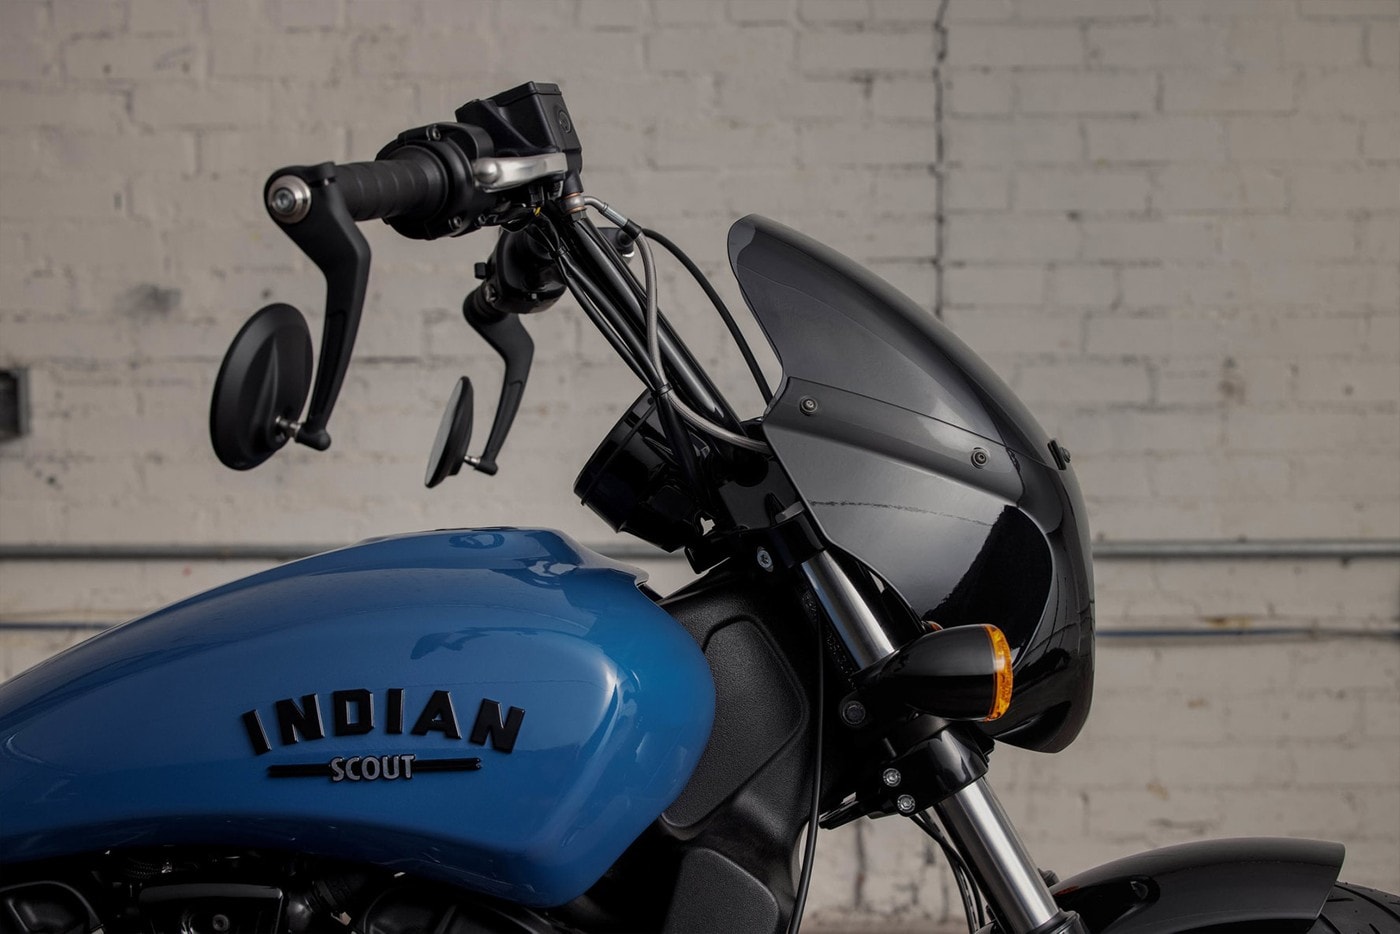 Indian Motorcycle 人氣車款 Scout 推出全新 2022 Rogue 版本車型